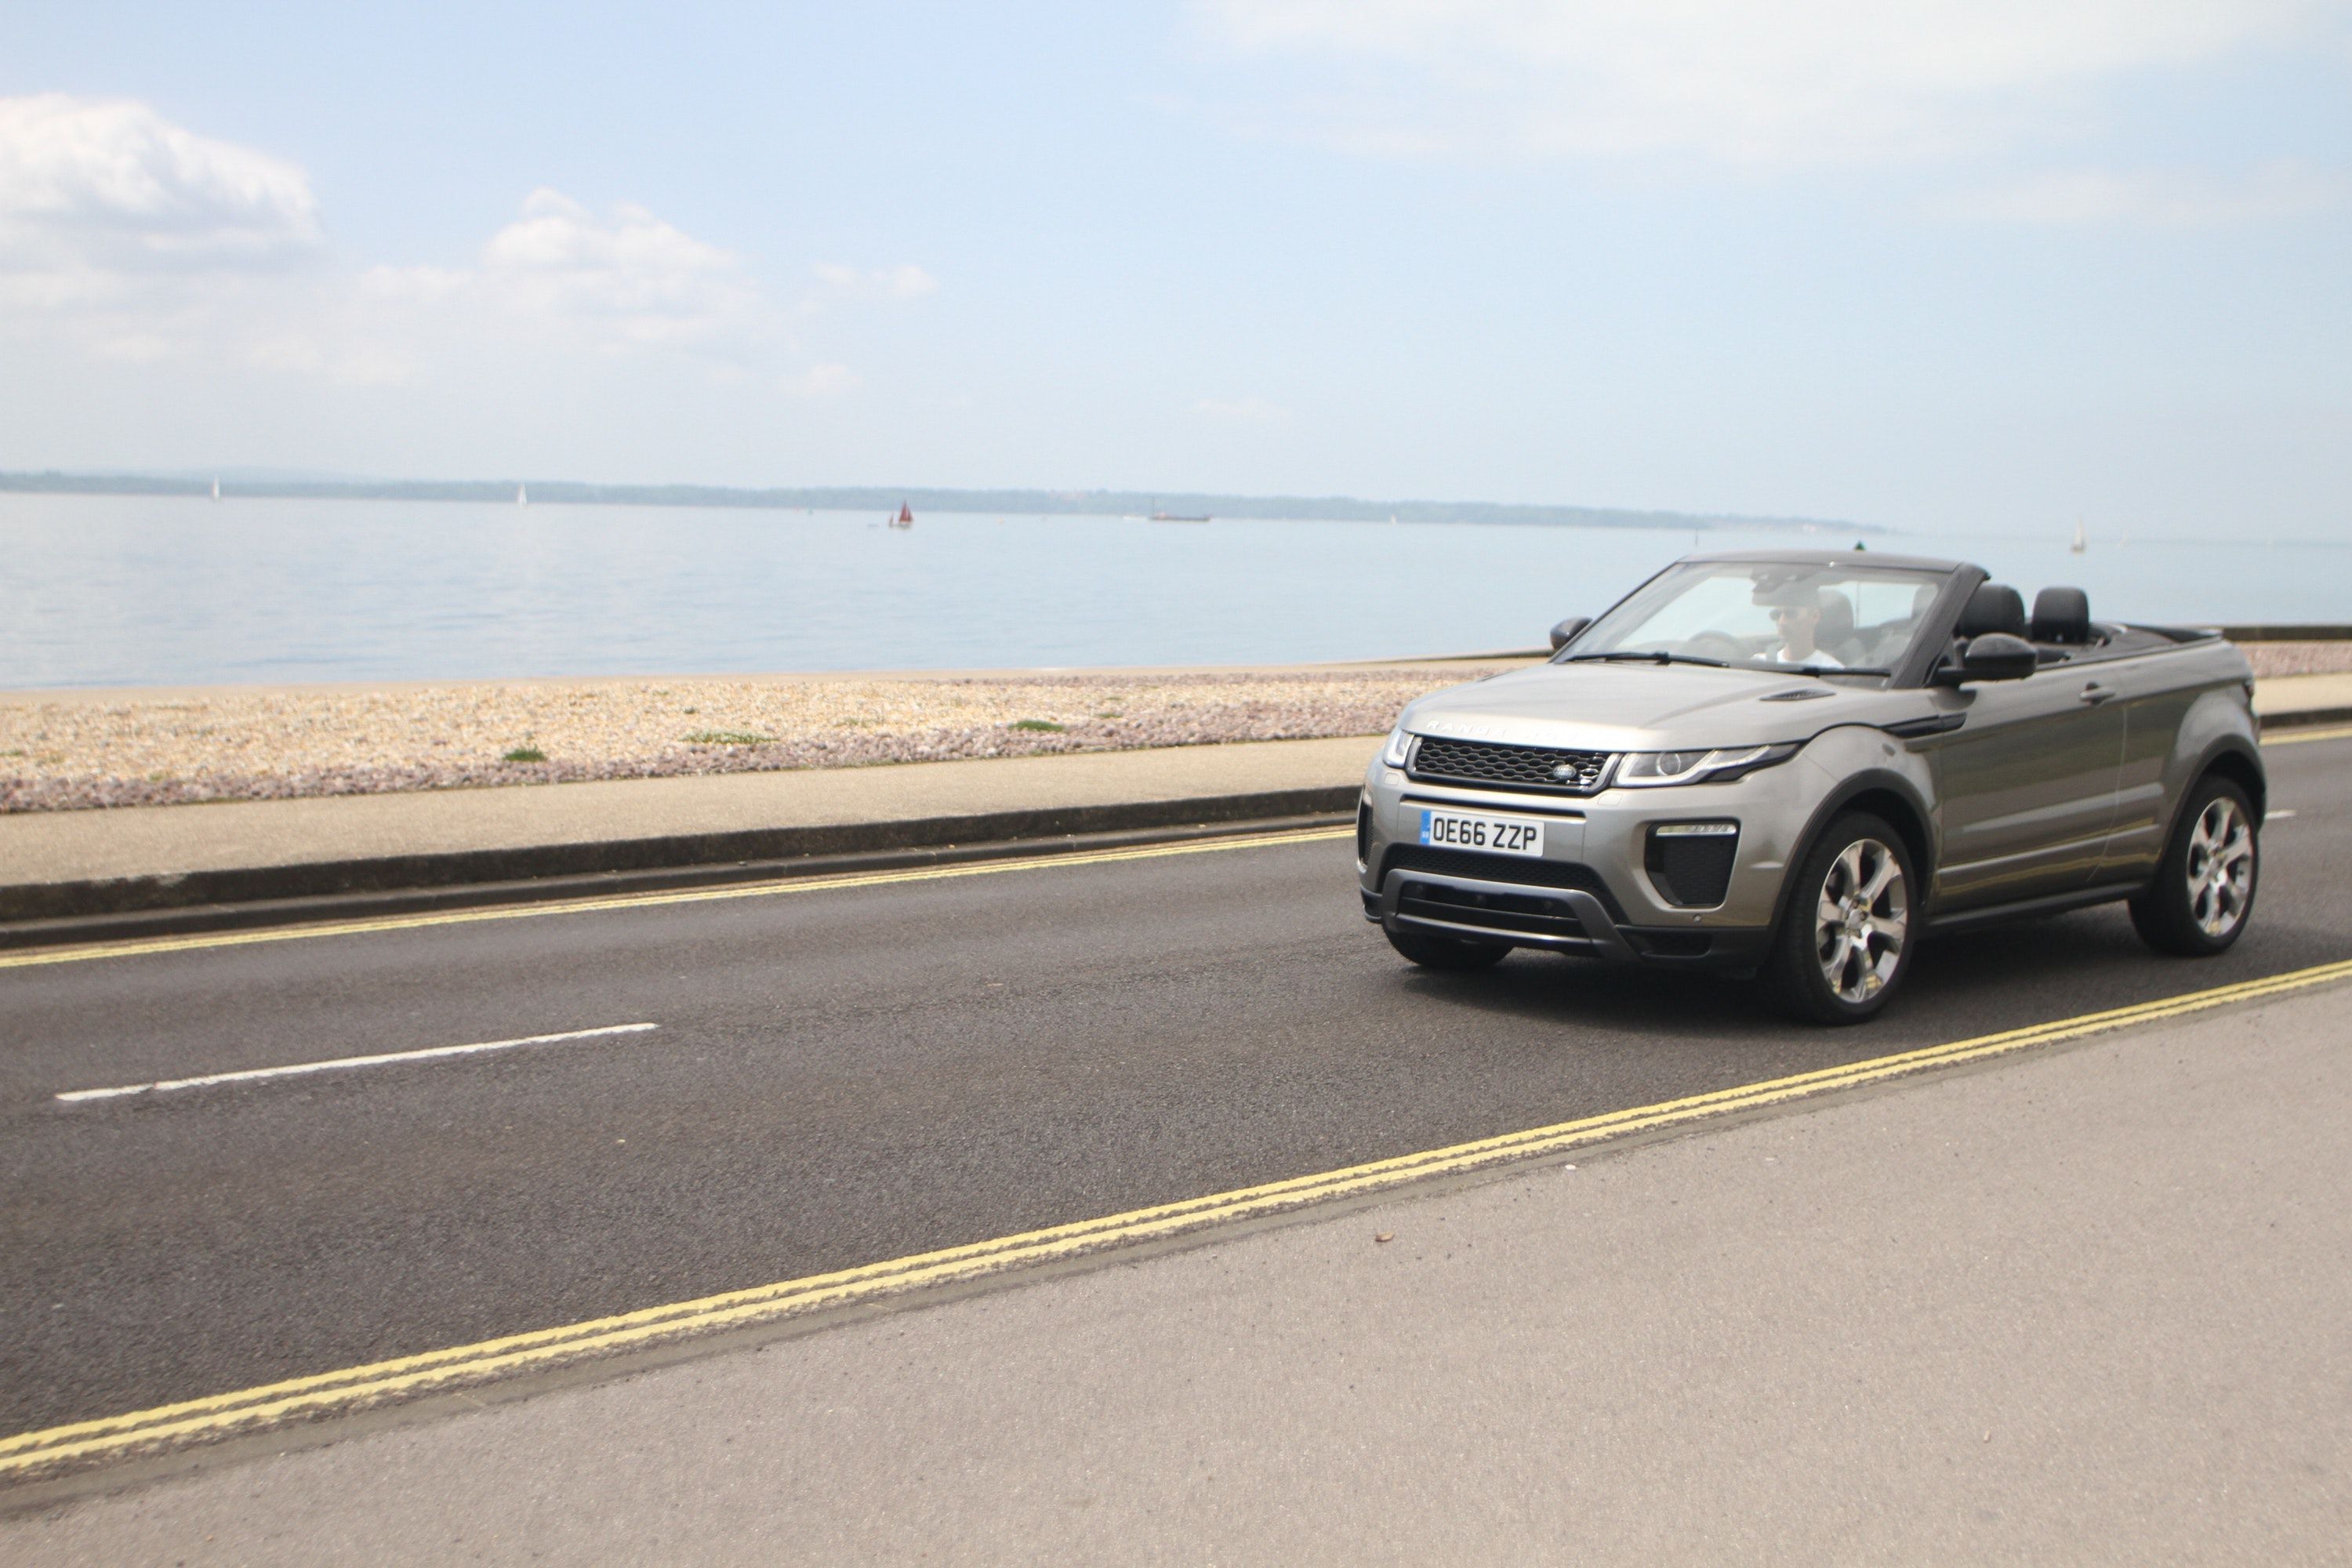 Bronze Land Rover Range Rover Evoque convertible car driving by the sea